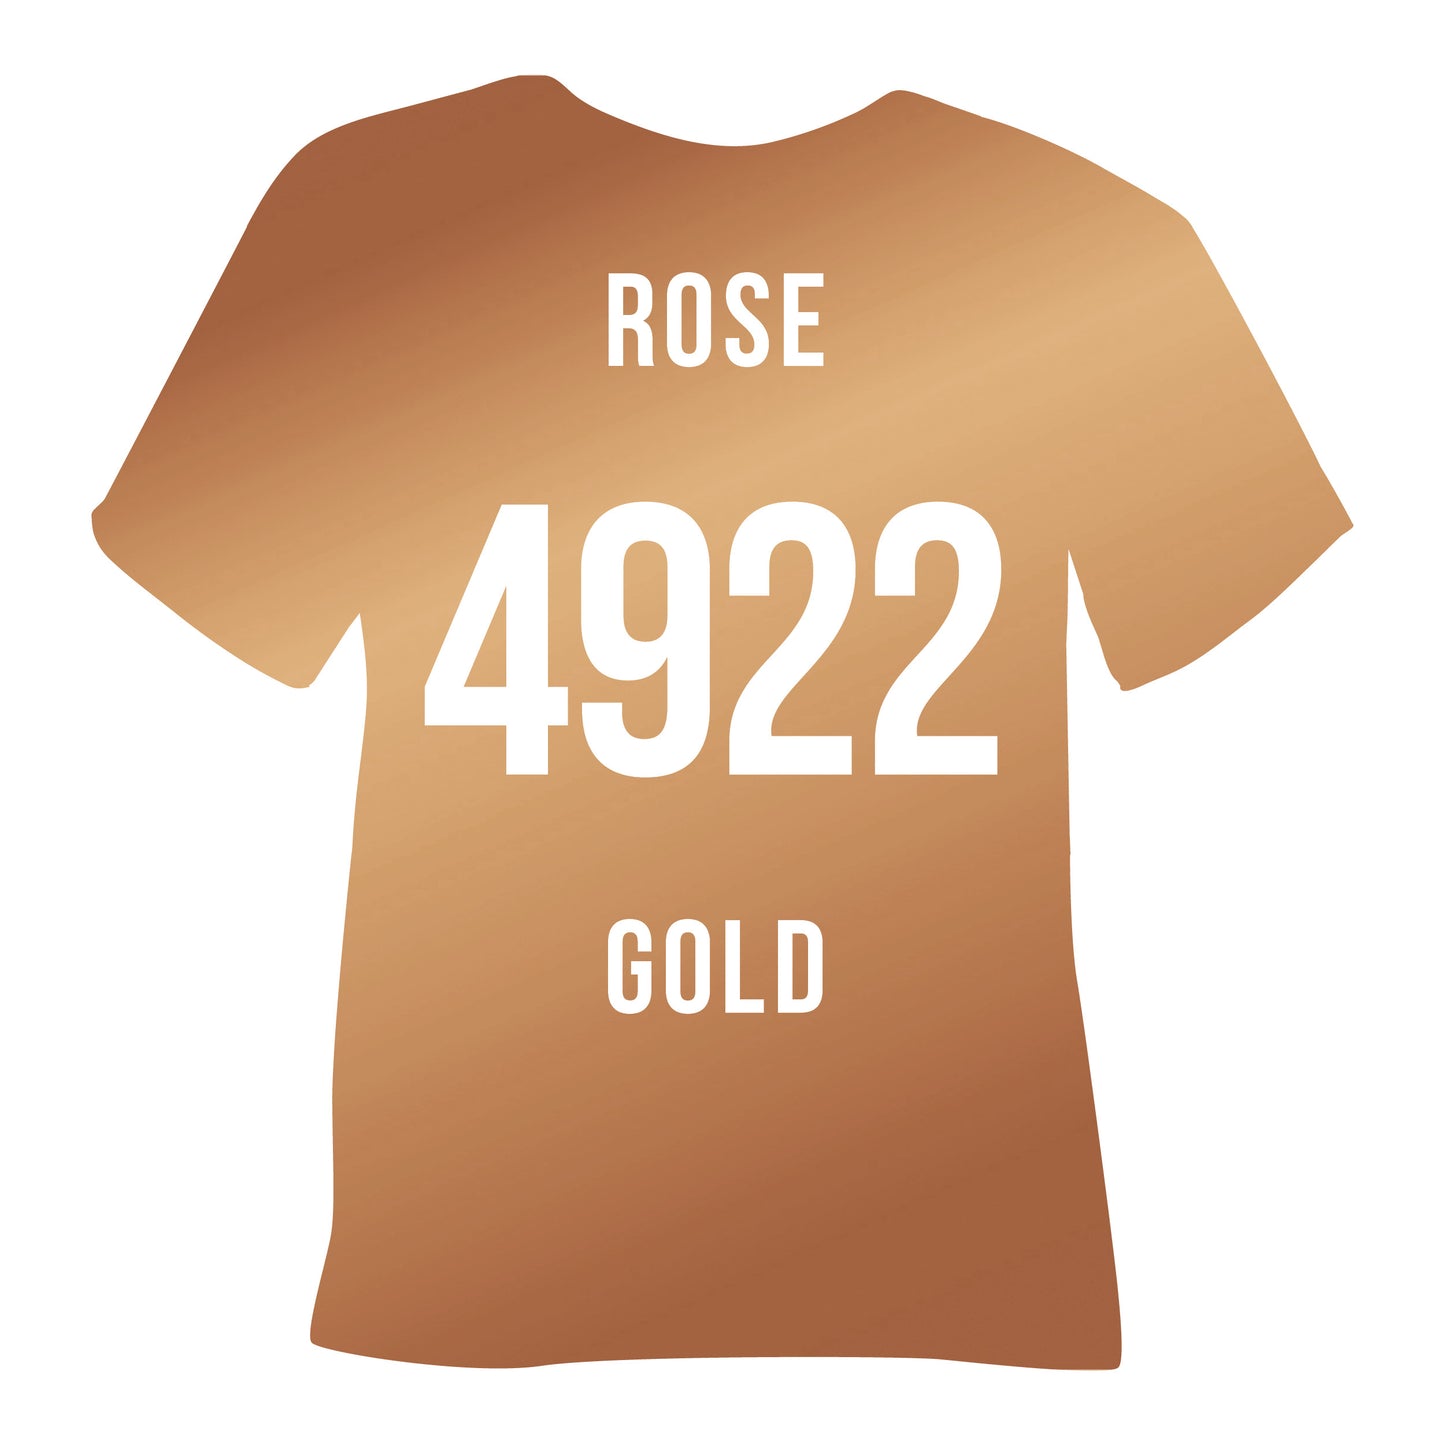 POLI-FLEX TURBO "ROSE GOLD" 4922 A4 FORMATWARE